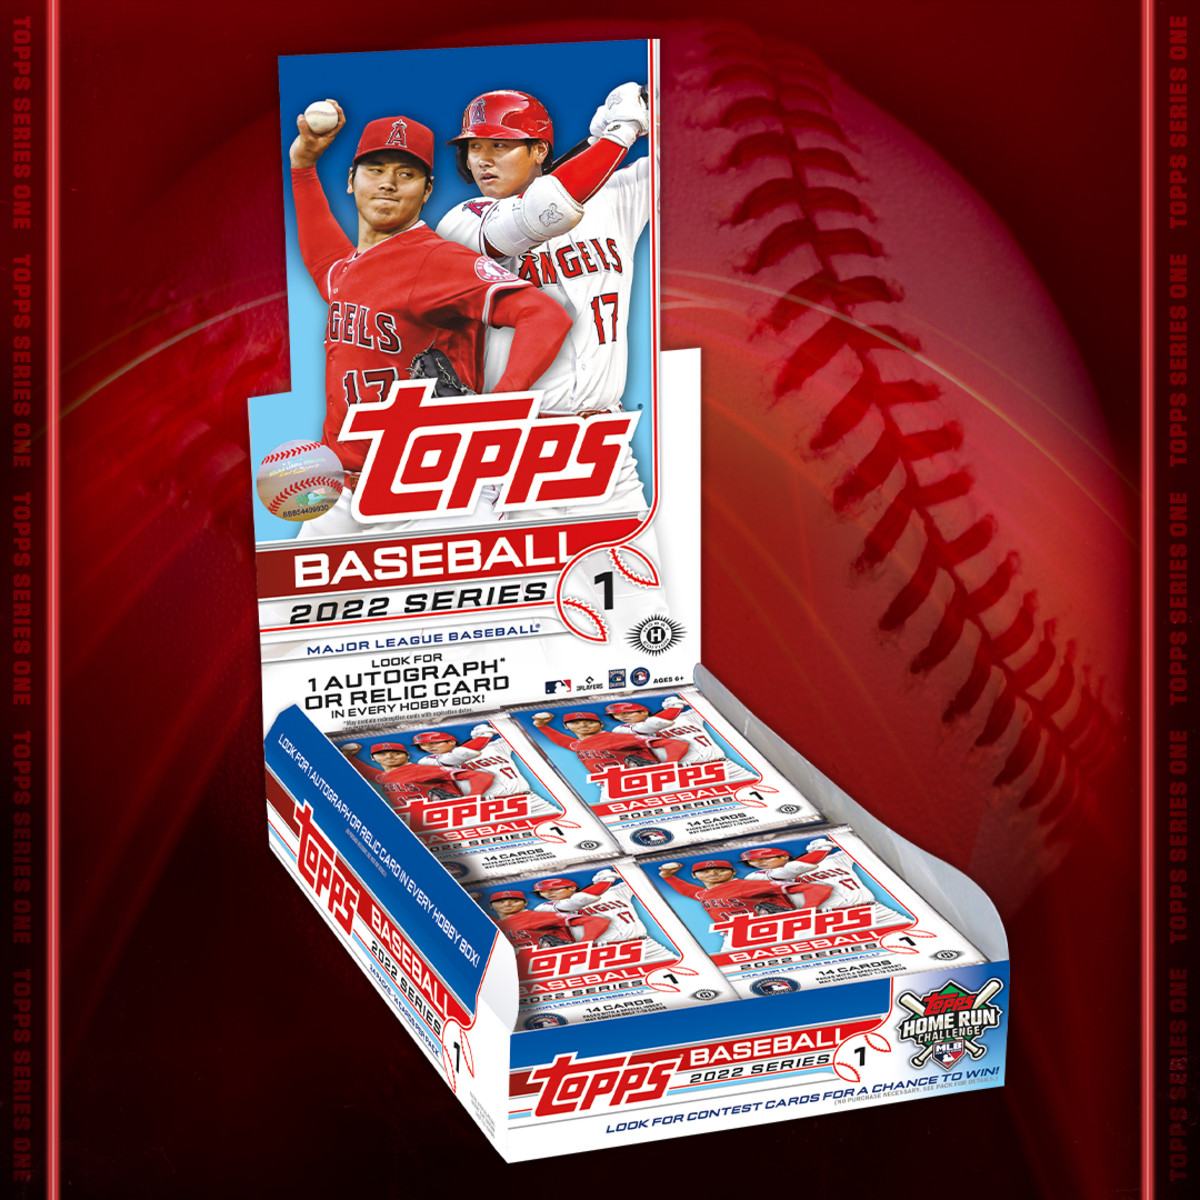 2022 Topps Series 1 Baseball with AL MVP Shohei Ohtani on the cover.